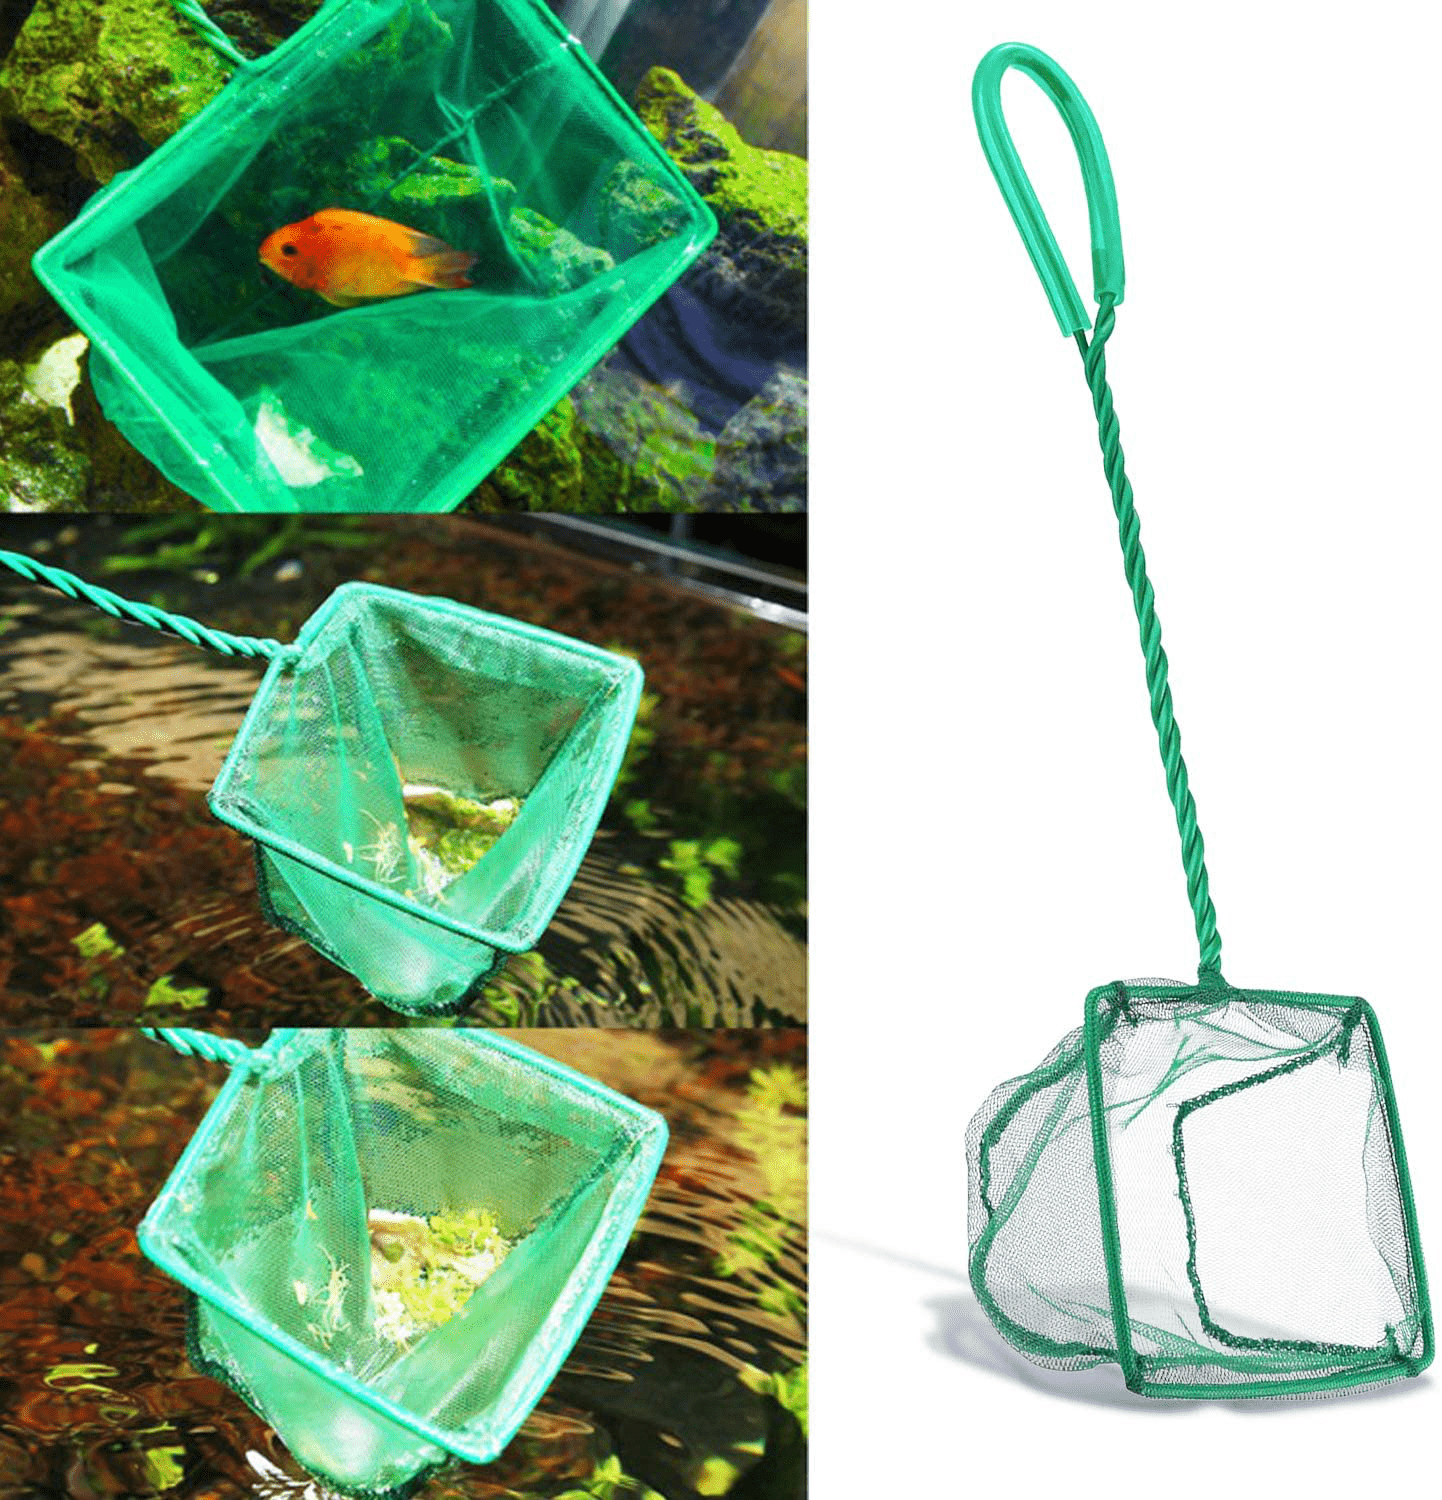 2 PCS Aquarium Fish Nets ,DSSPORT 4 Inch Aquarium Net Fine Mesh Small Fish Catch Nets with Plastic Handle Green